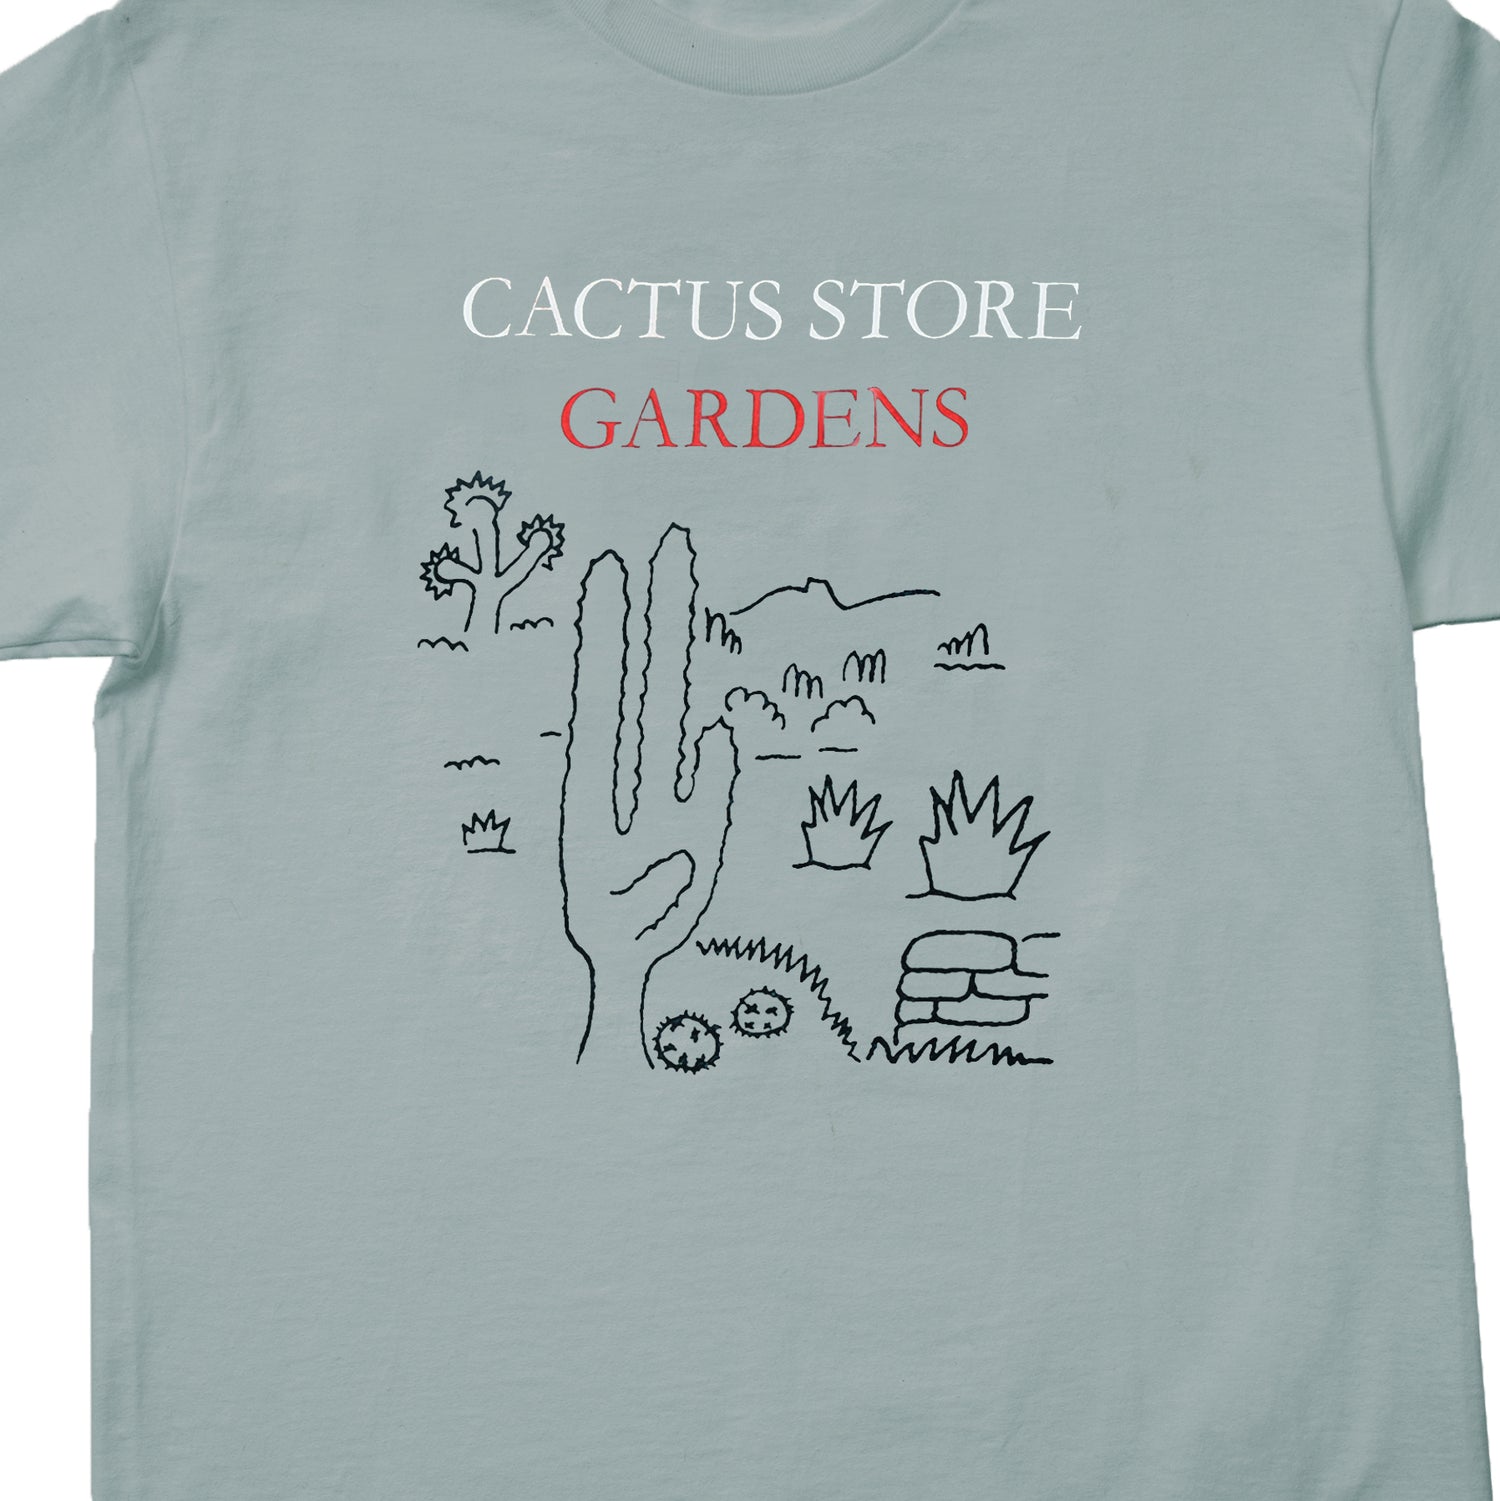 Cactus Store Gardens T-Shirt